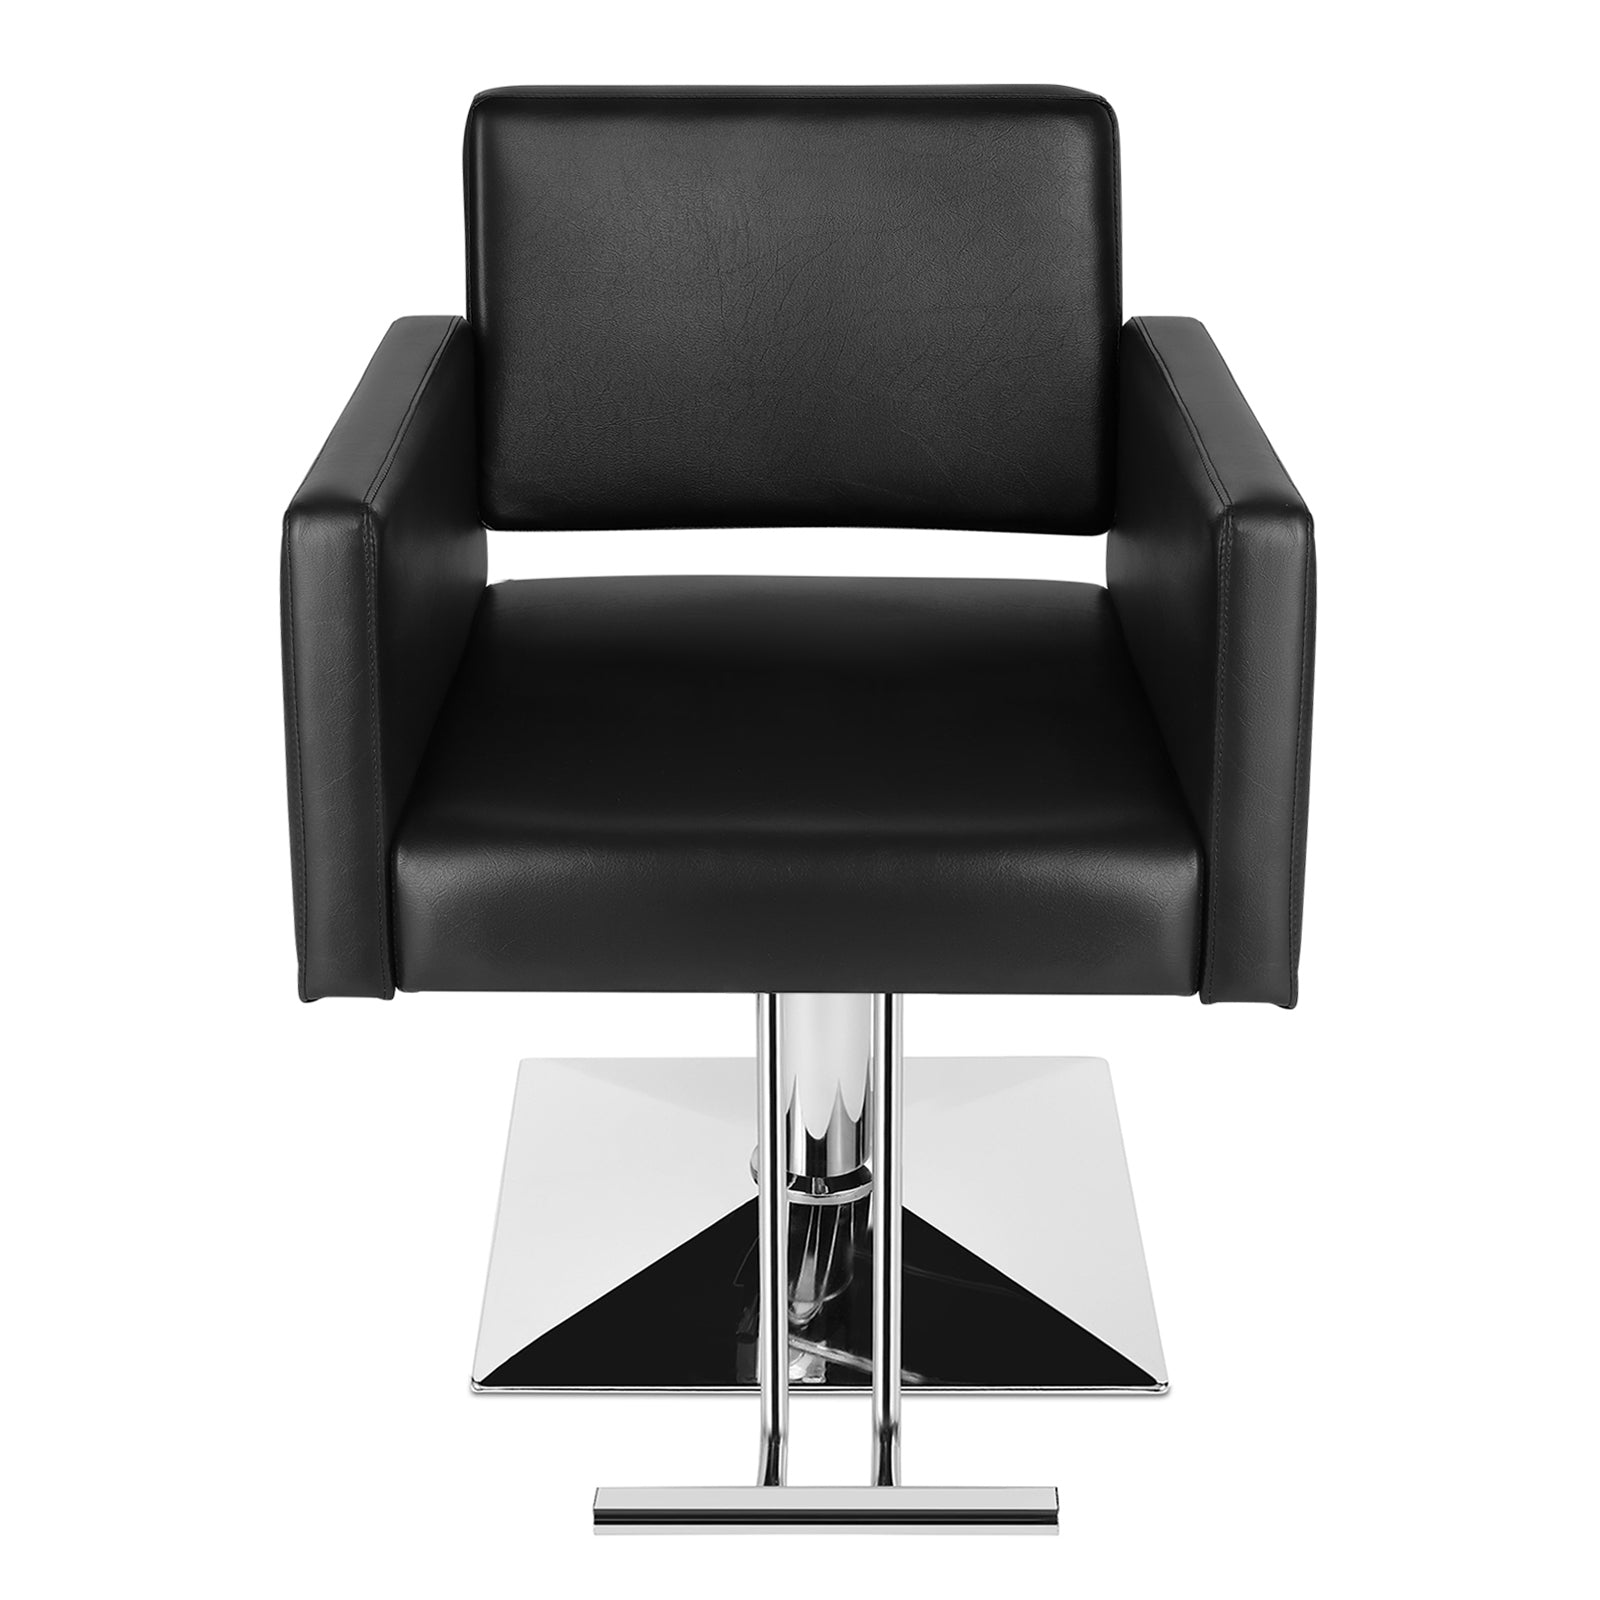 Barber Shop barber chair salon chair beauty styling chair hydraulic pump  C107b